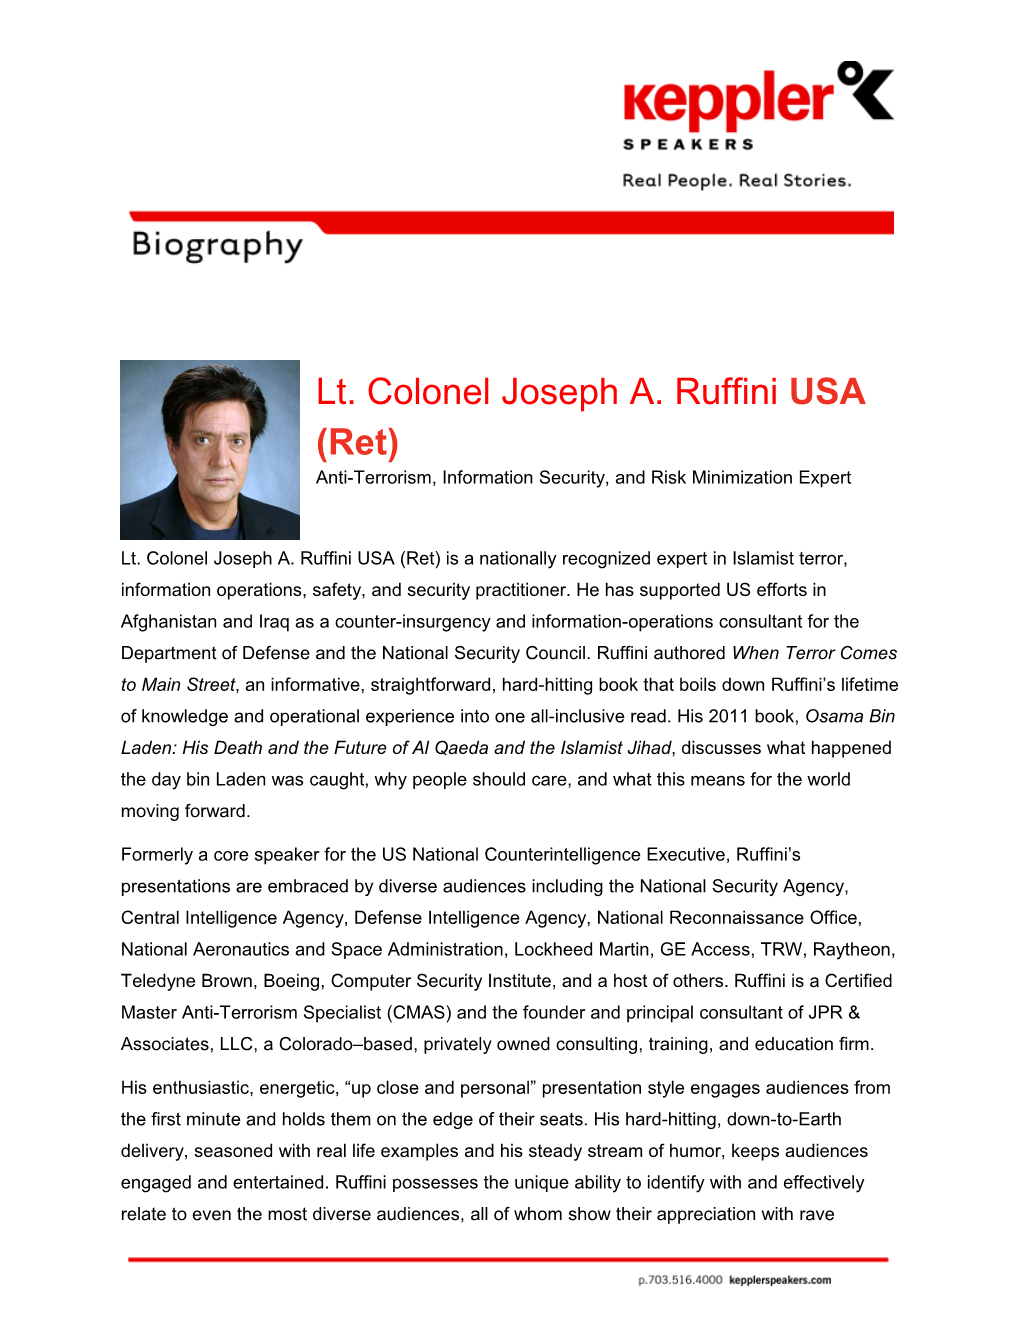 Lt. Colonel Joseph A. Ruffini USA (Ret) Anti-Terrorism, Information Security, and Risk